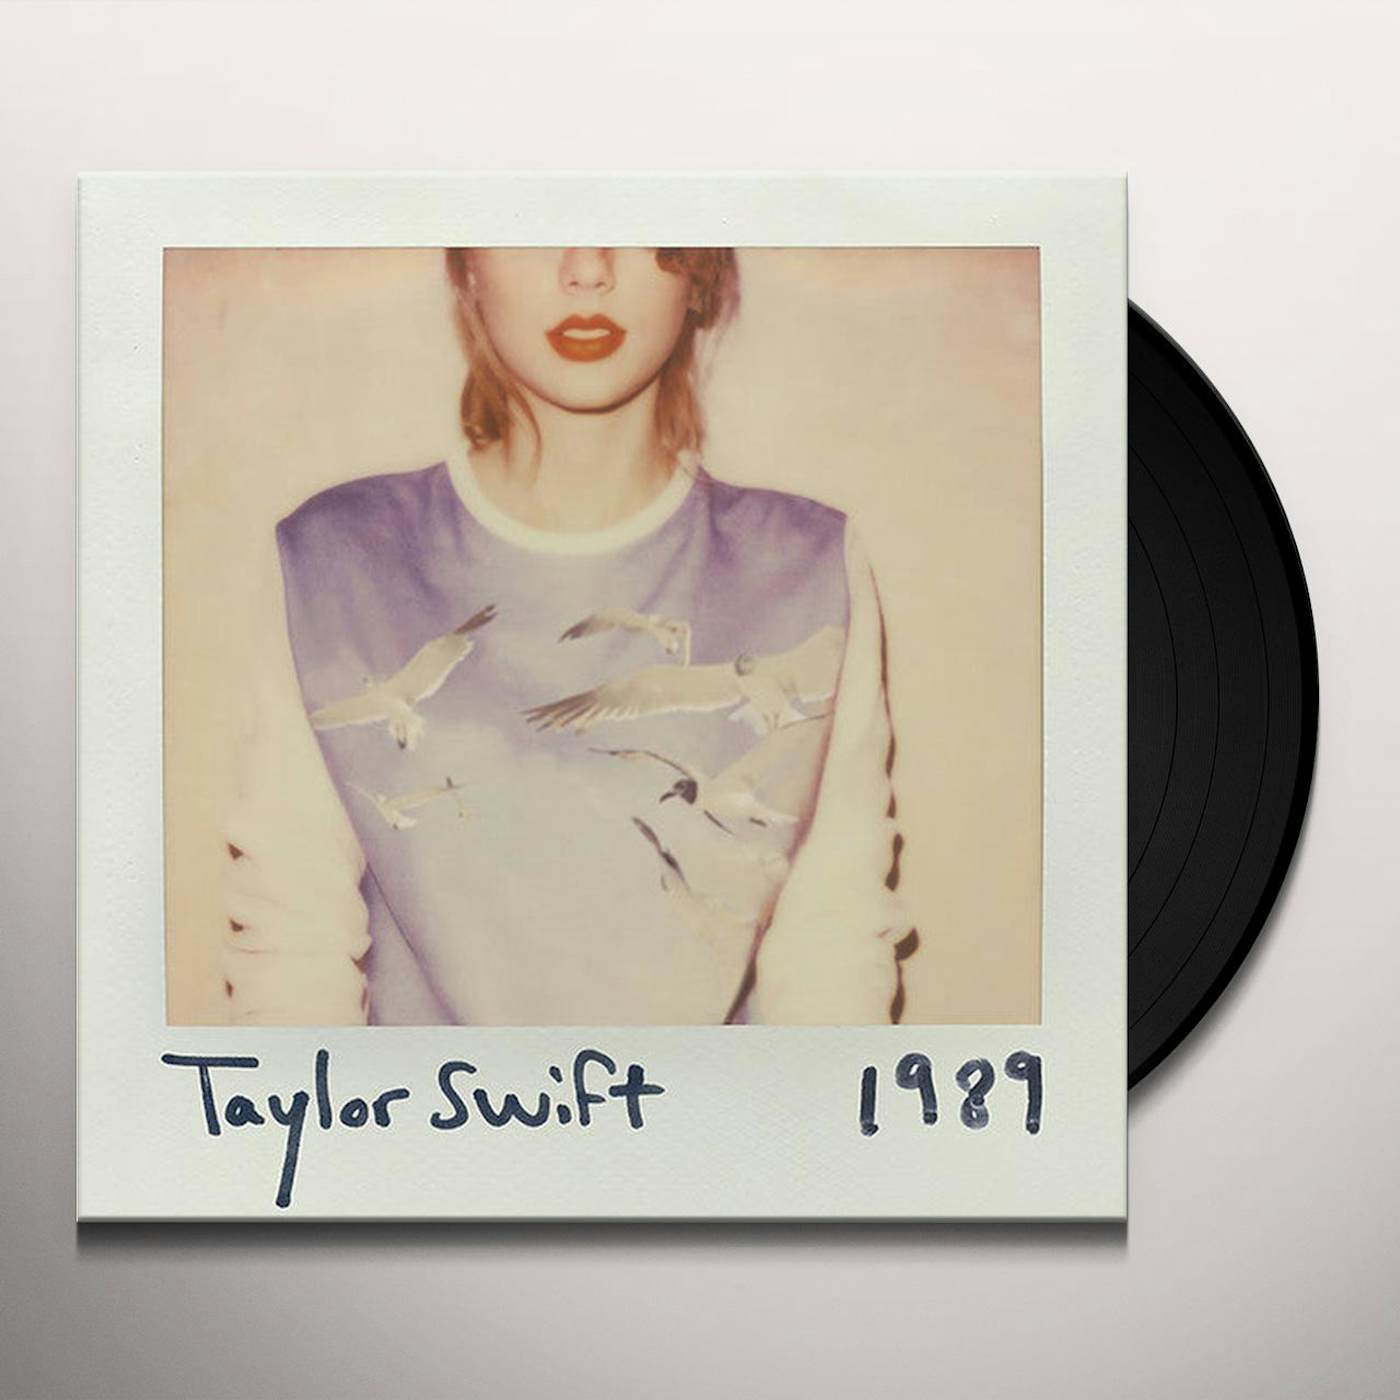 Taylor Swift 1989 vinyl record  Taylor swift 1989, Taylor swift